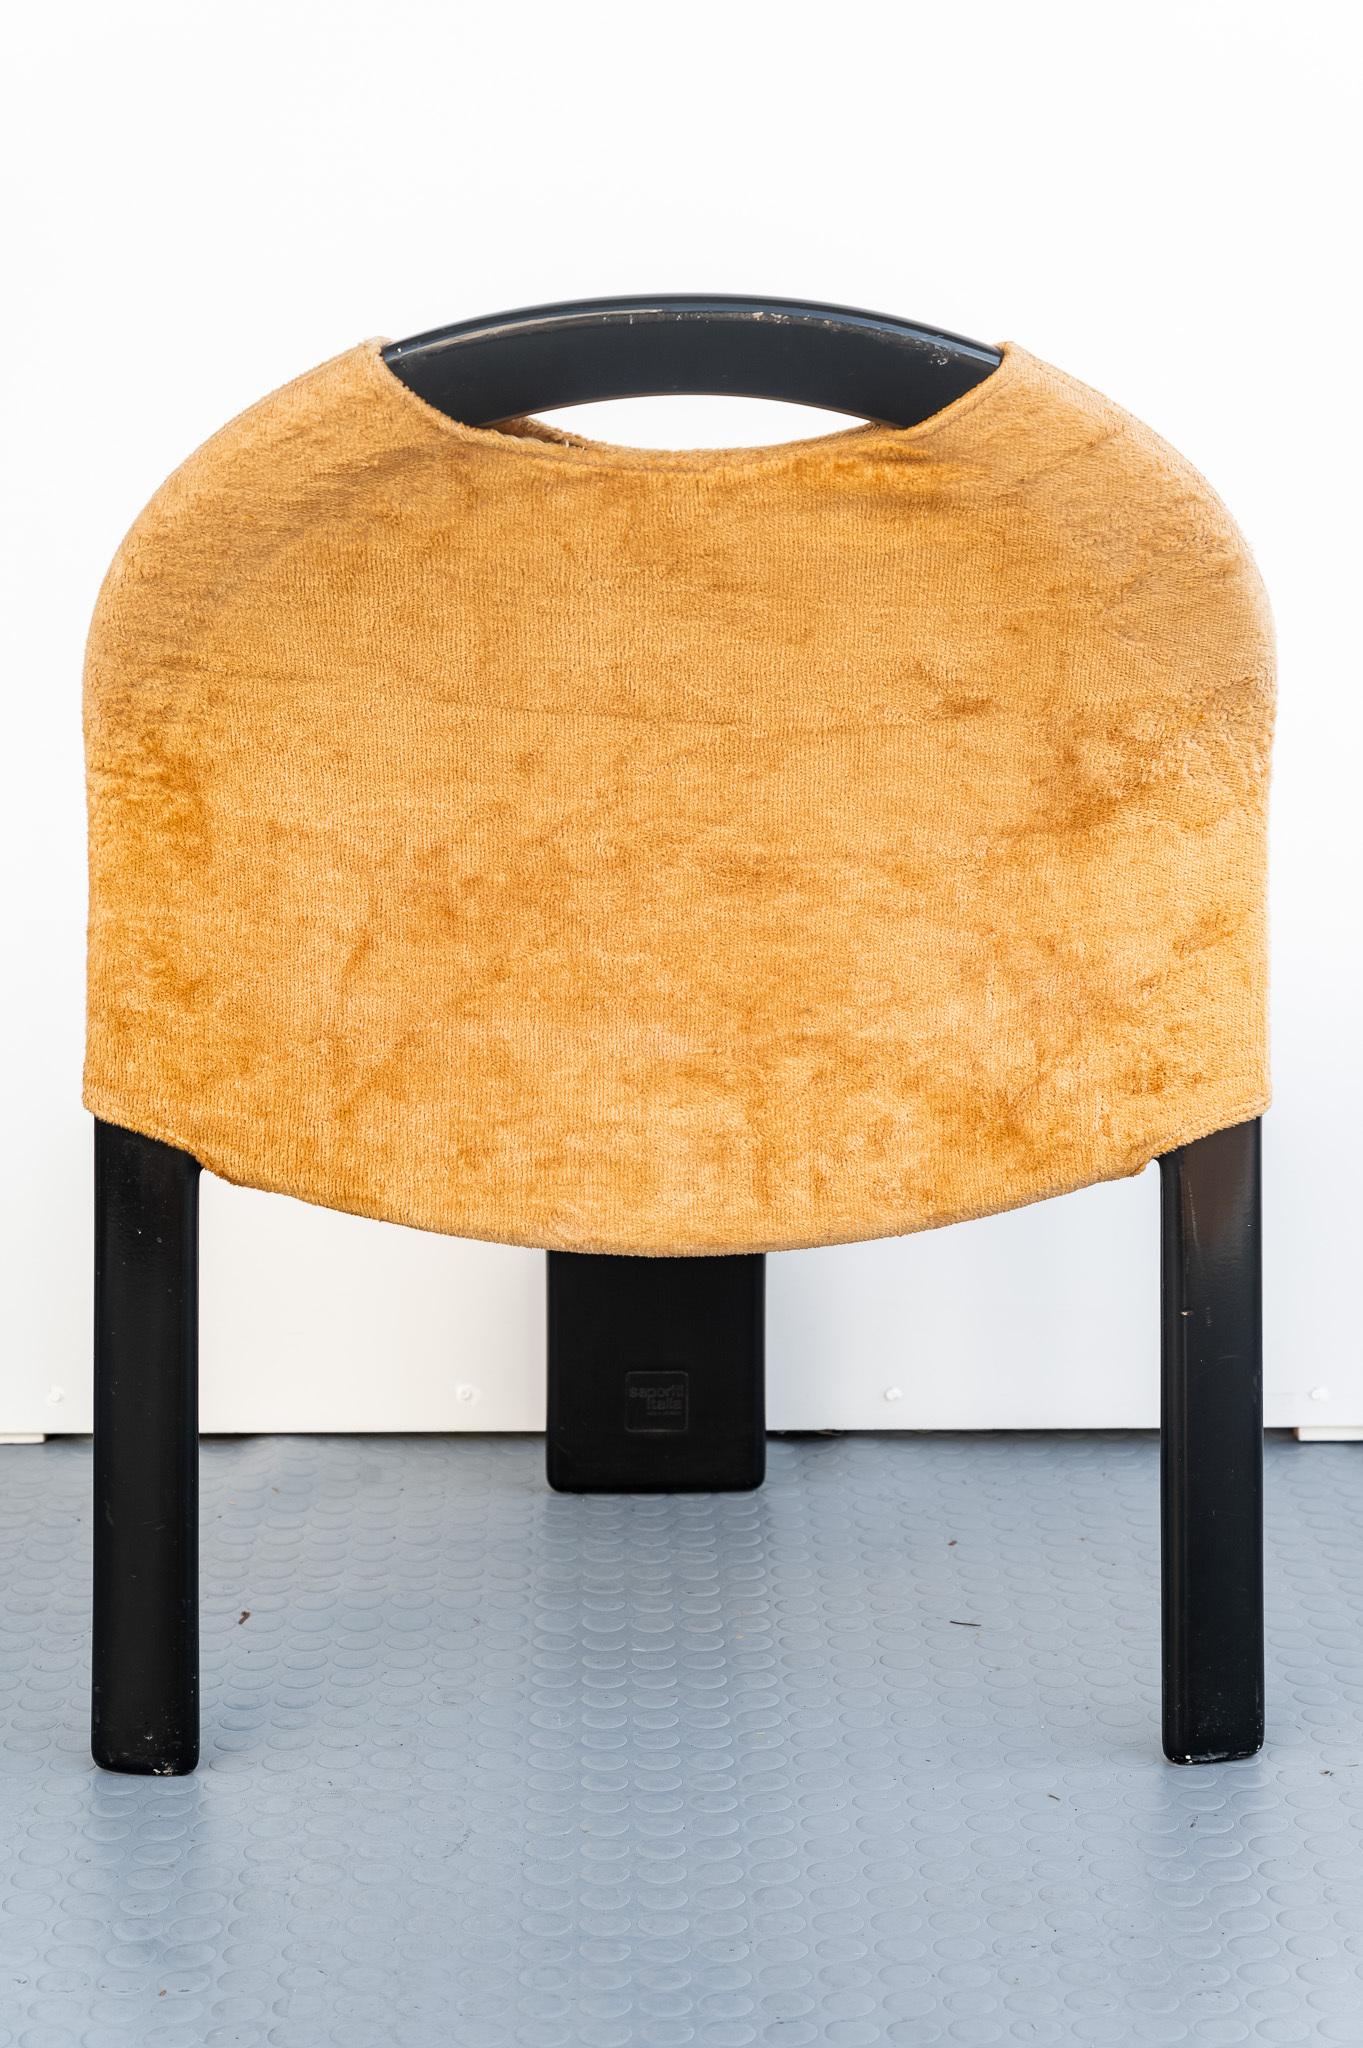 Bellissimo SET di due sedie Giovanni Offredi Saporiti, Anno 1970. 
SET di due sedie disegnate da Giovanni Offredi e prodotte da Saporiti nell'anno 1970. La structure est en ABS laccato nero avec une assise et un siège en velluto de couleur beige,